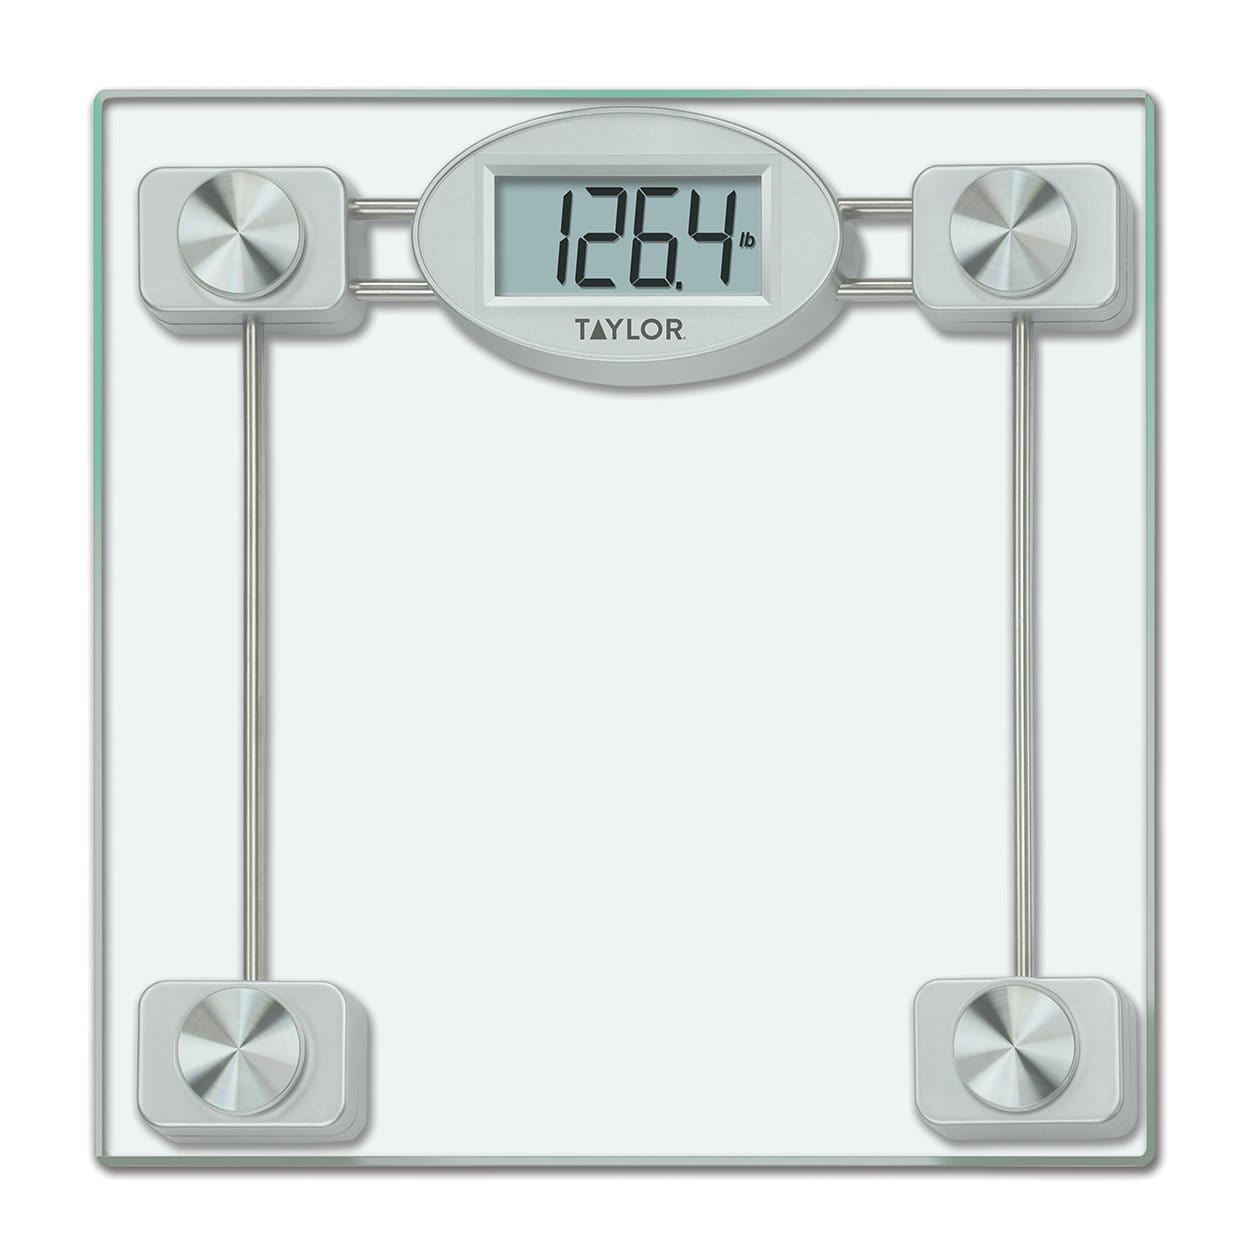 Taylor Bathroom Glass Digital Scale 500lb Capacity Silver